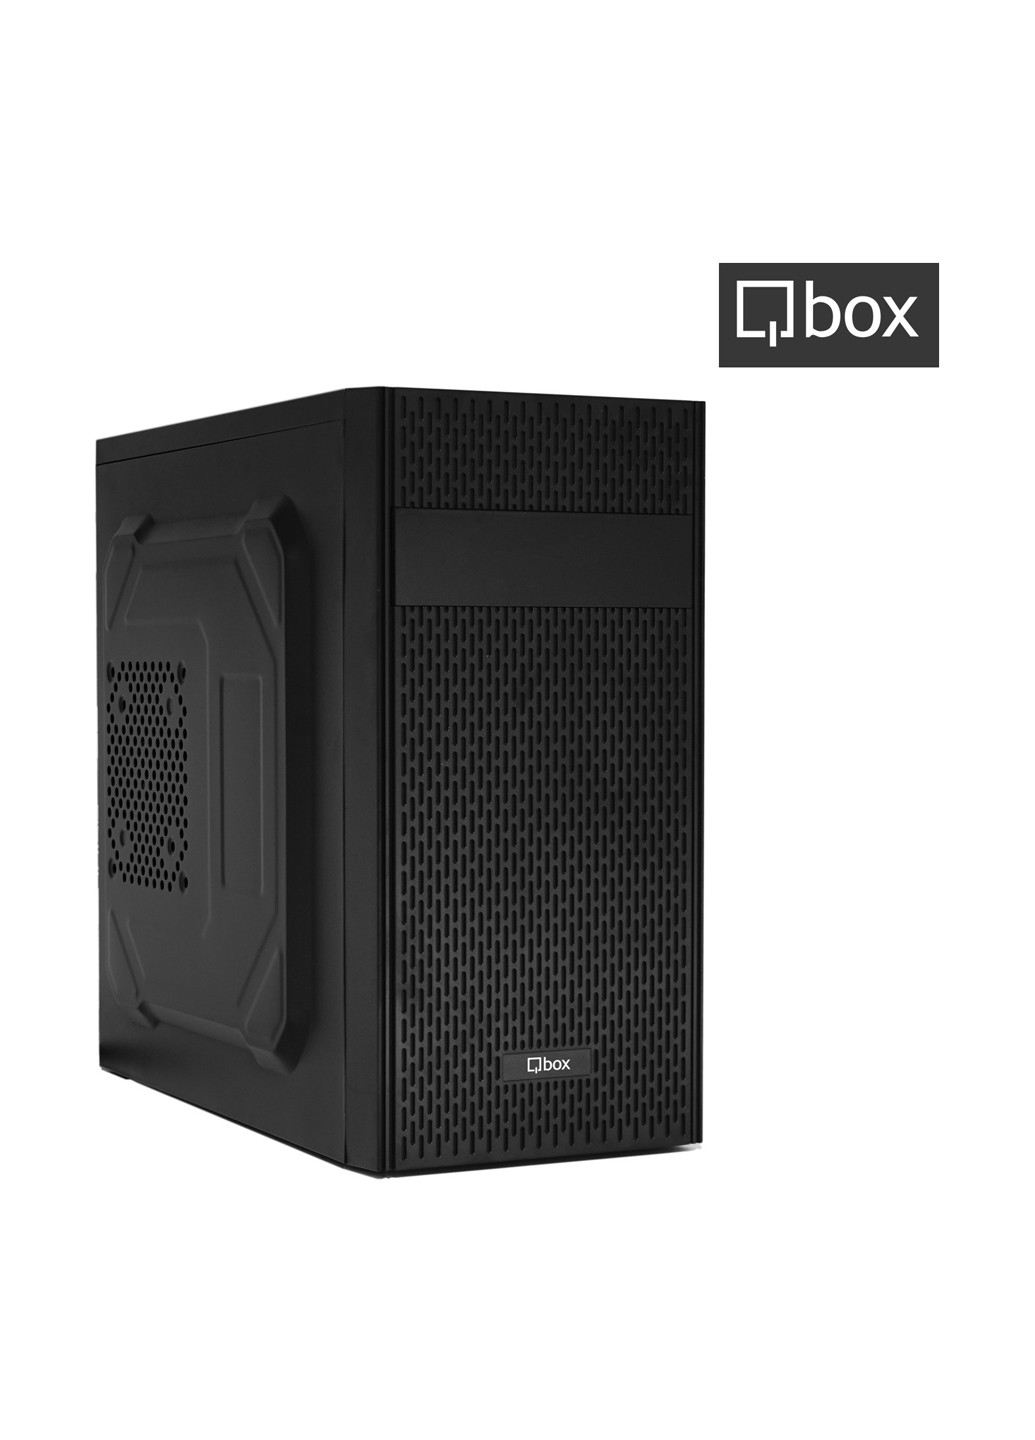 Комп'ютер A2467 Qbox qbox a2467 (131396739)